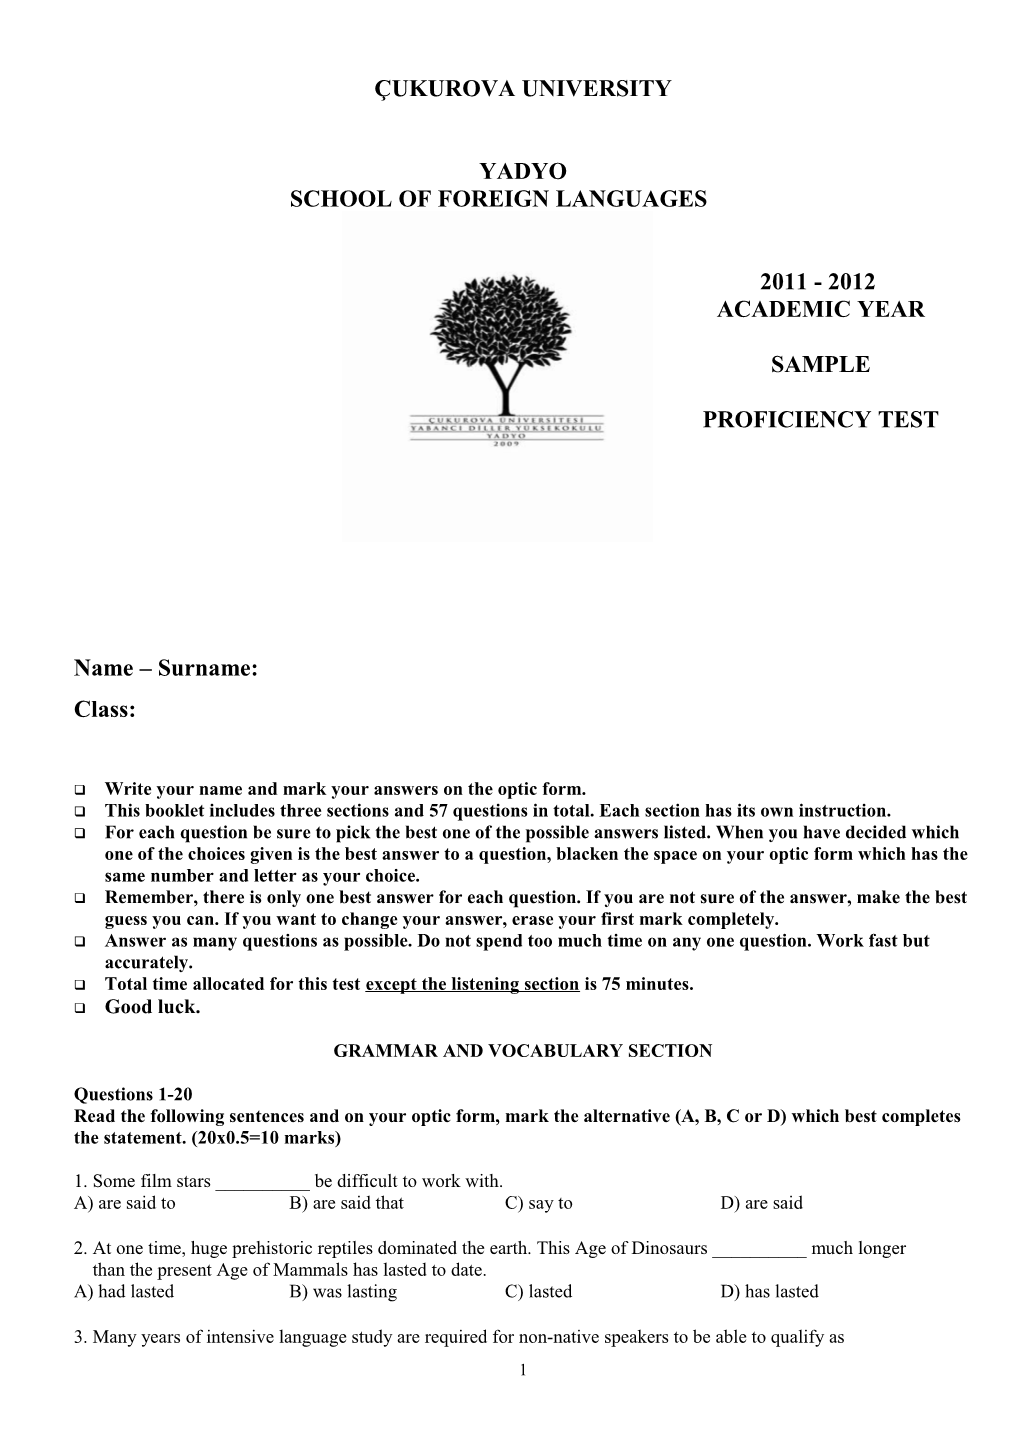 Proficiency Test